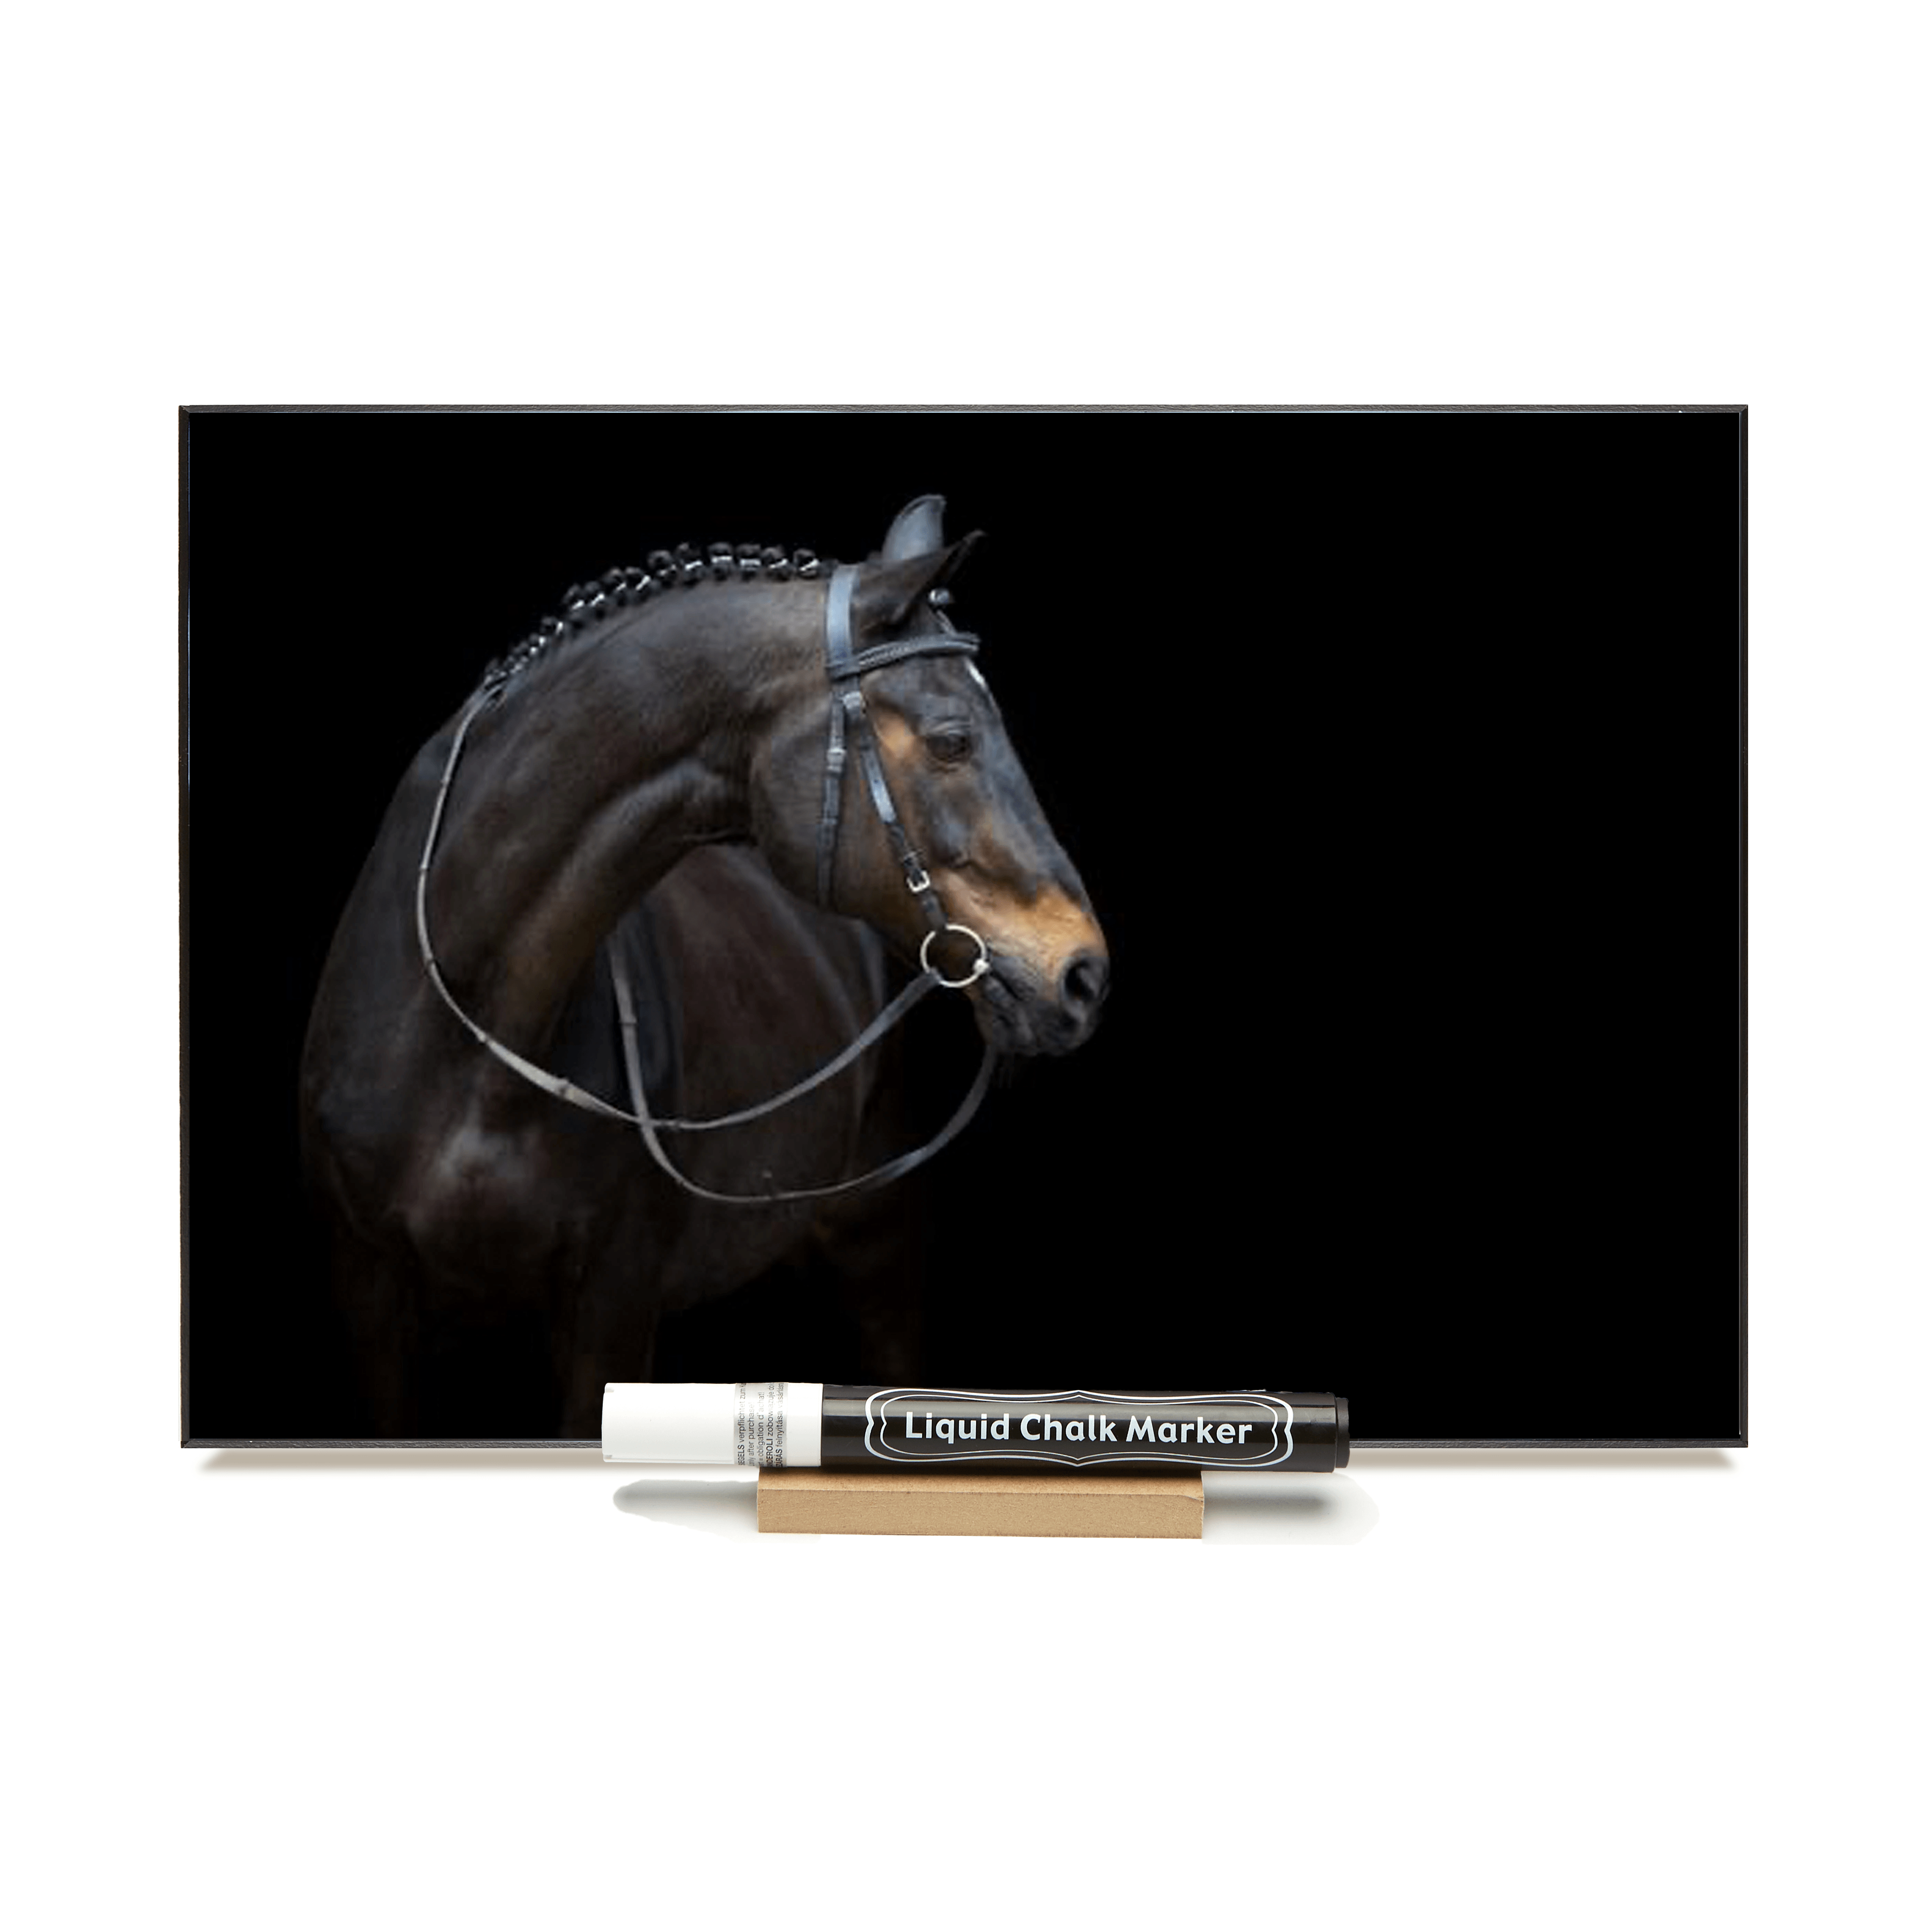 "Braided Horse"  PHOTO CHALKBOARD  Includes Chalkboard, Chalk Marker & Stand